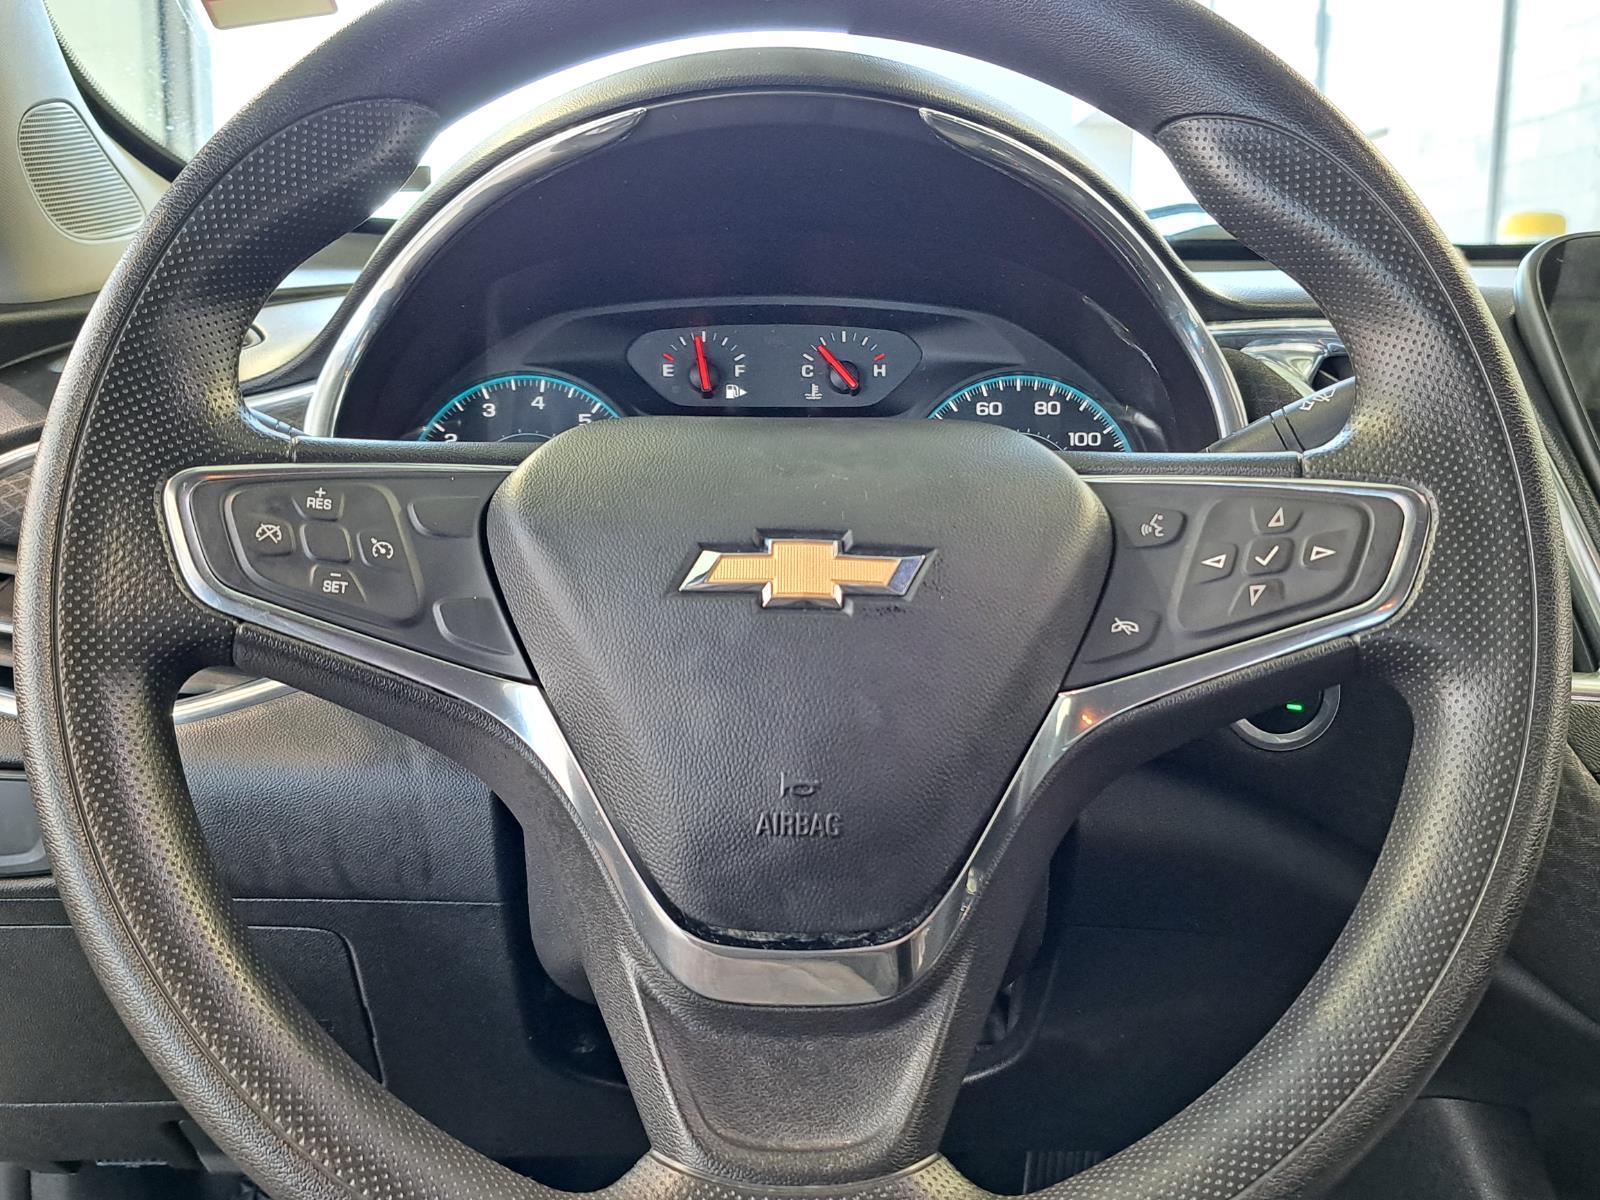 2020 Chevrolet Malibu LT Sedan 4 Dr. Front Wheel Drive mobile thumbnail 12